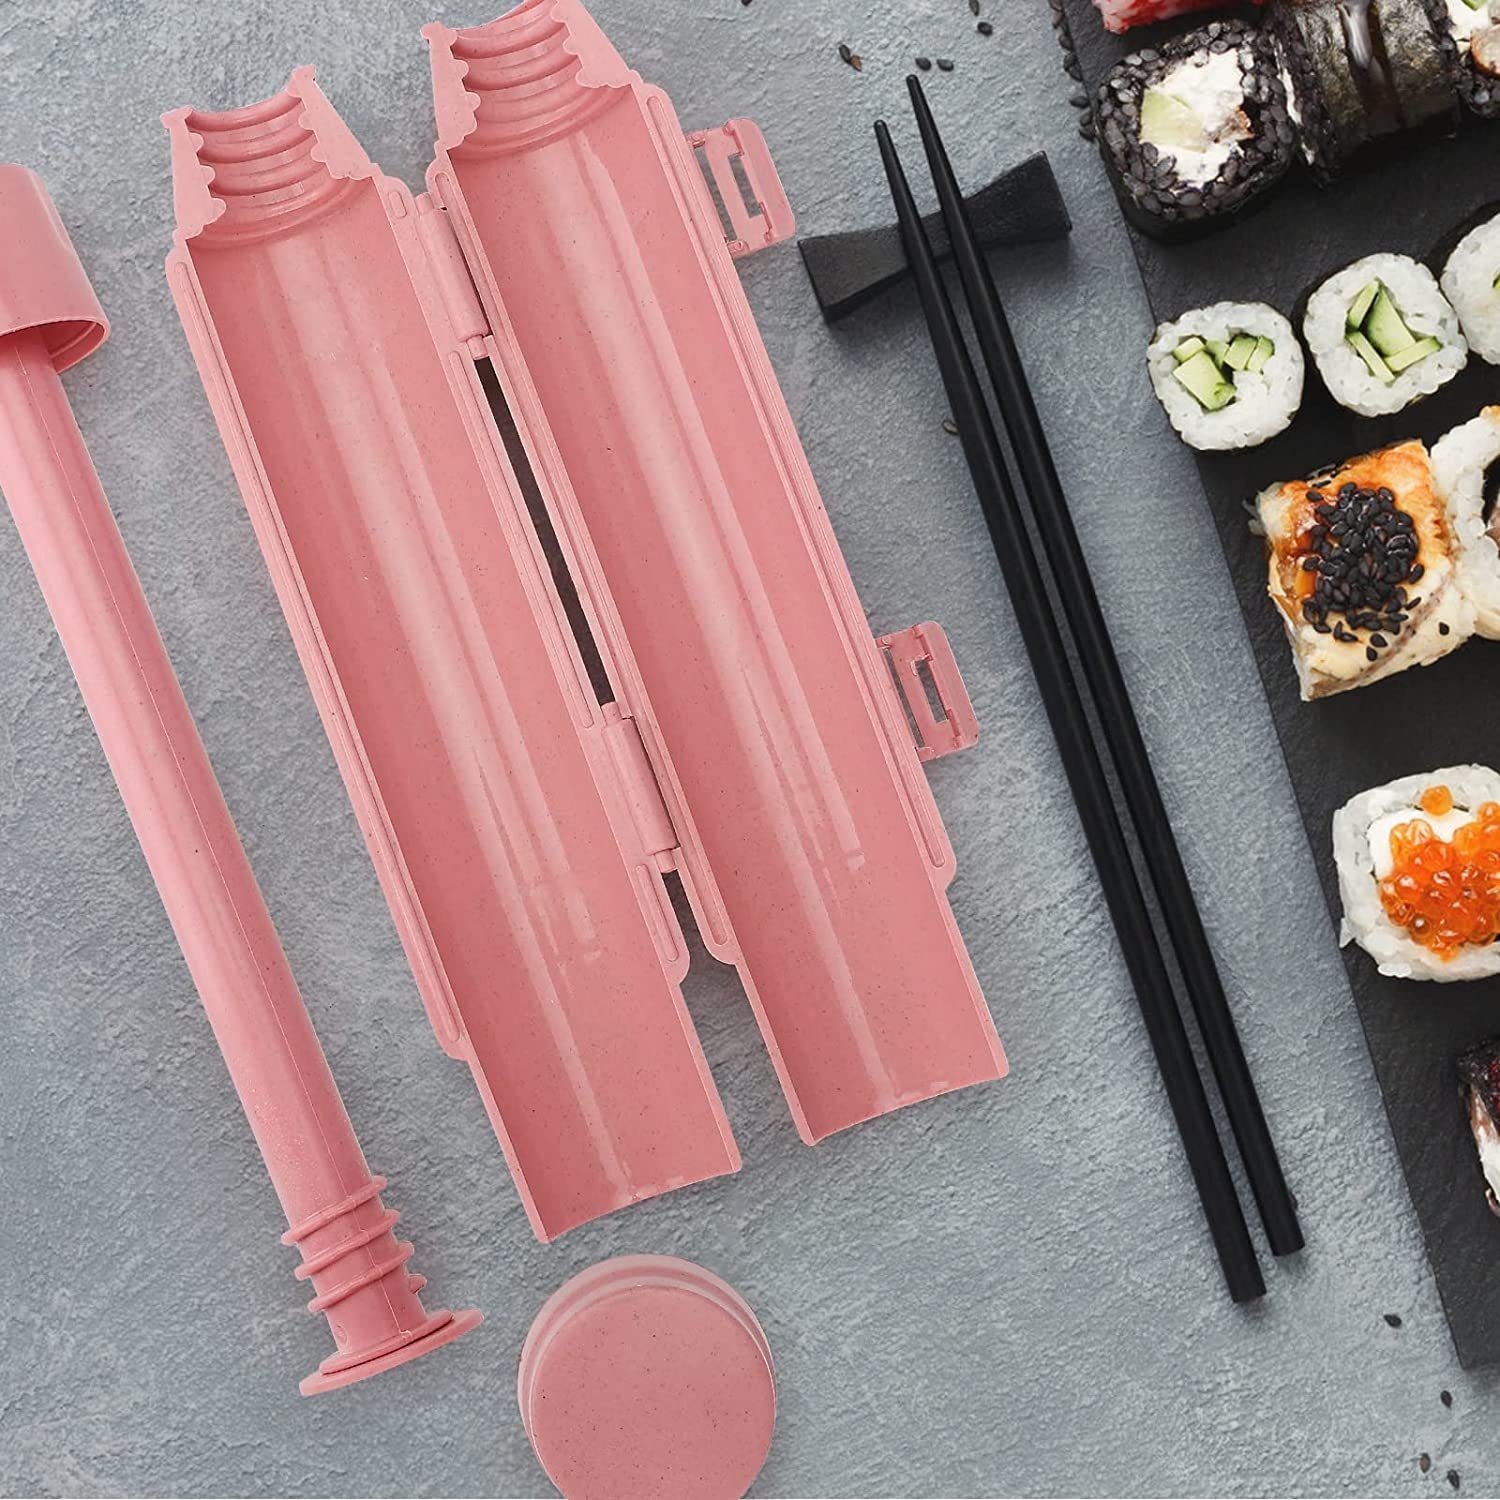 Sushiteller Sushi-DIY-Maschine, NUODWELL Sushi-Bazooka, gemeinsame Rosa Zubereitungswerkzeuge